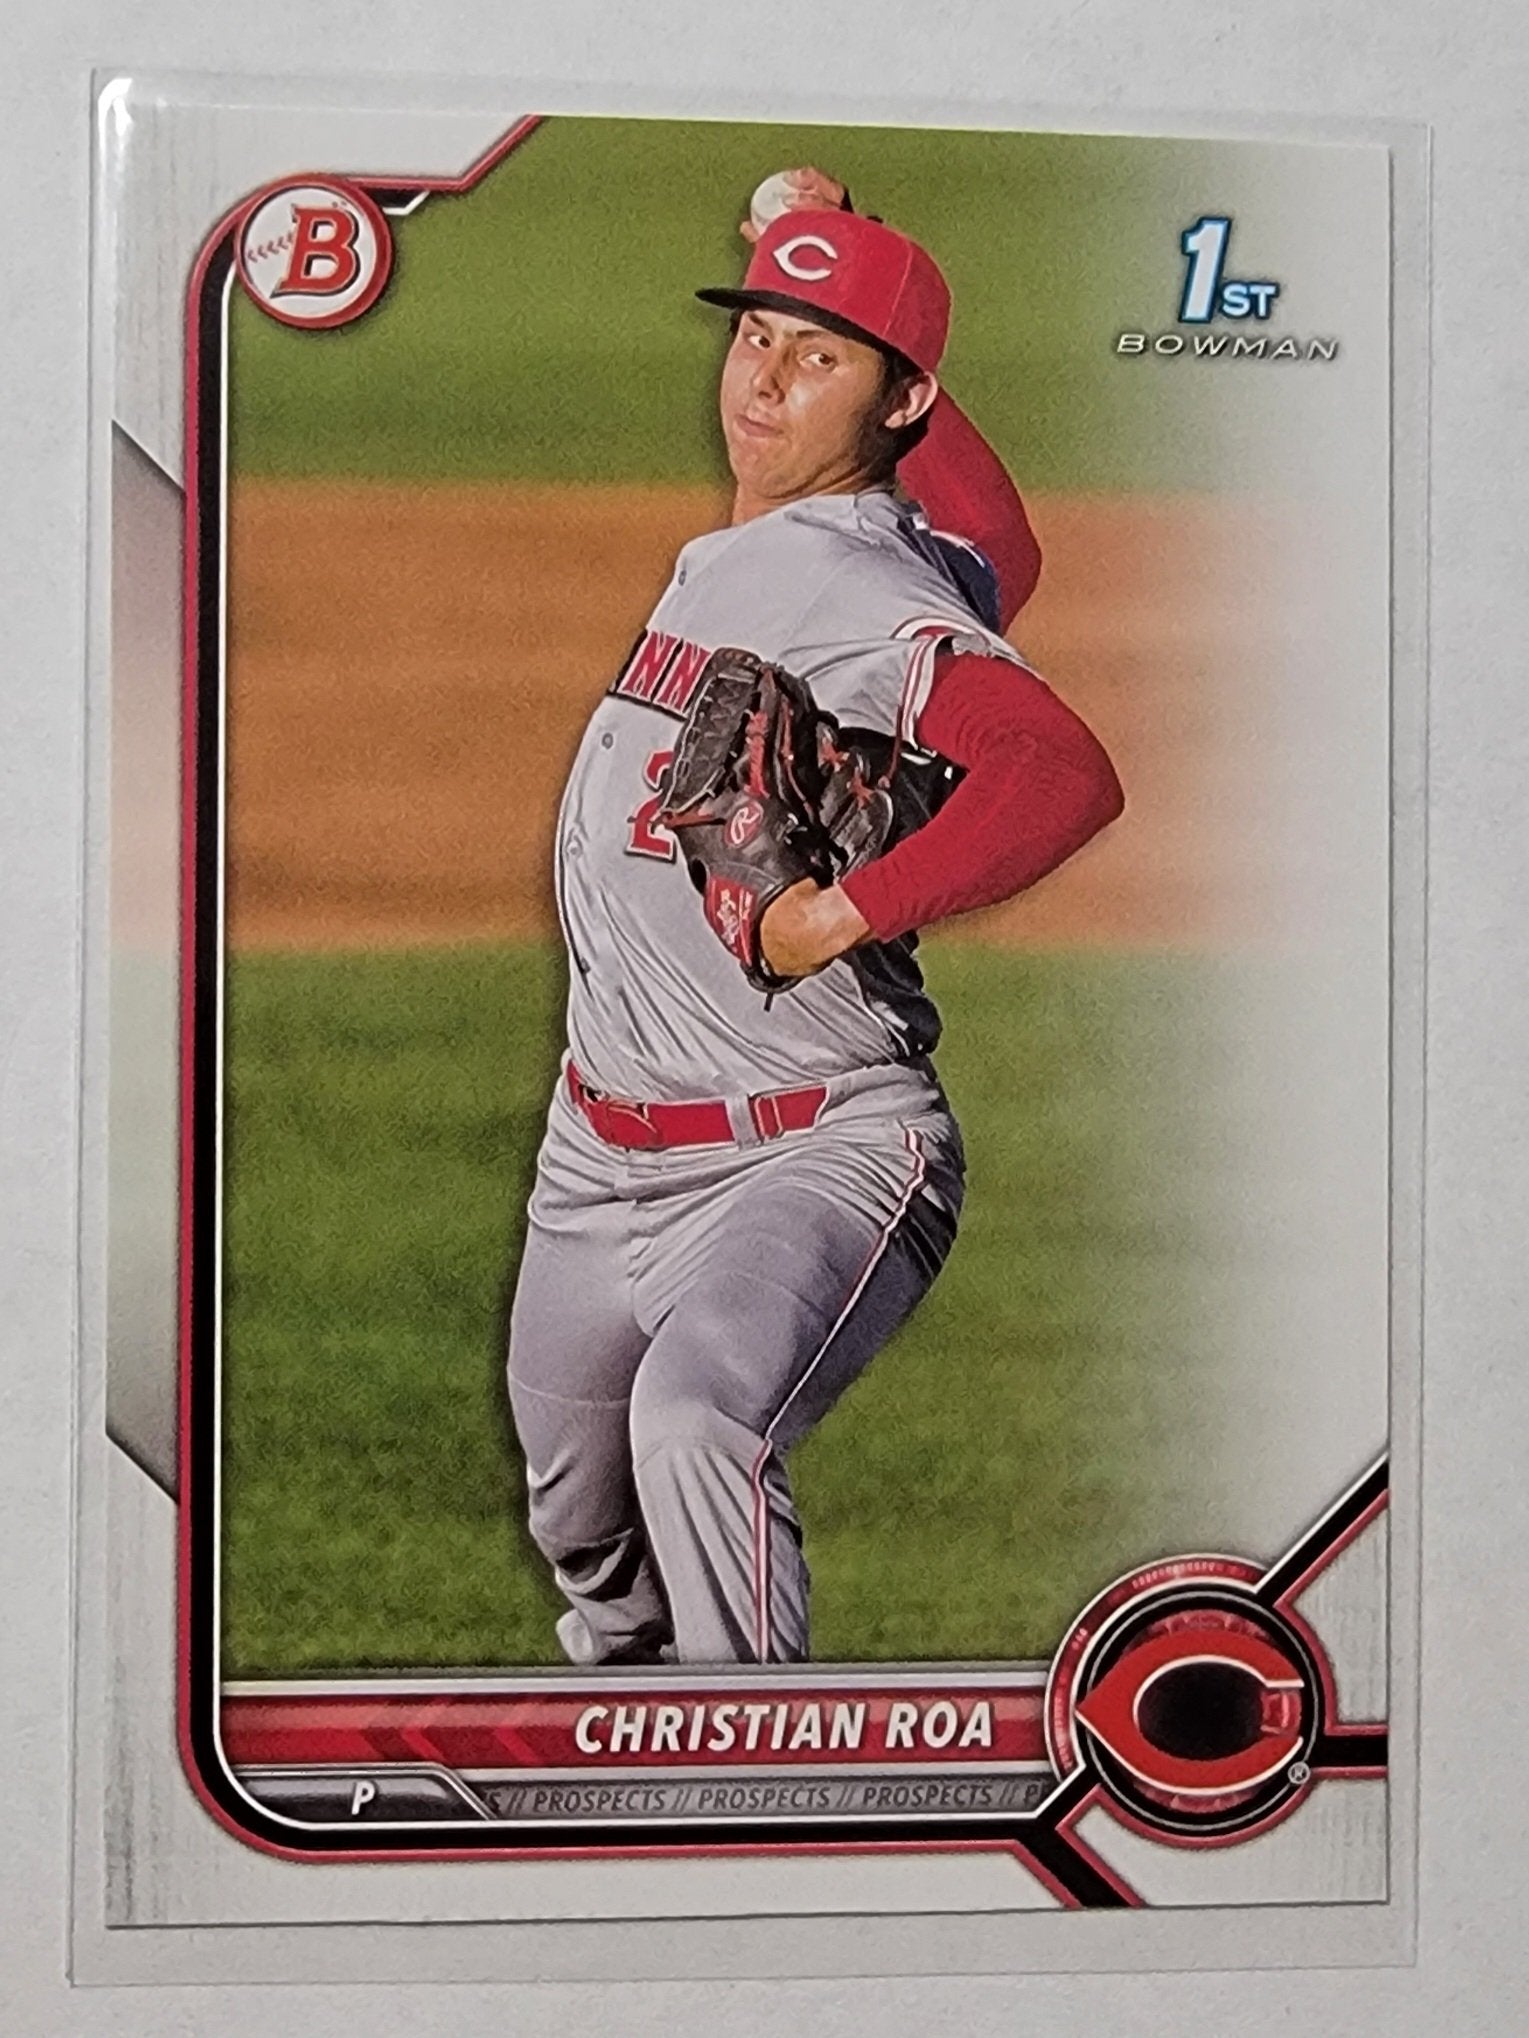 2022 Bowman Christian Roa Mega Box Paper 1st on Bowman Baseball Card AVM1 simple Xclusive Collectibles   